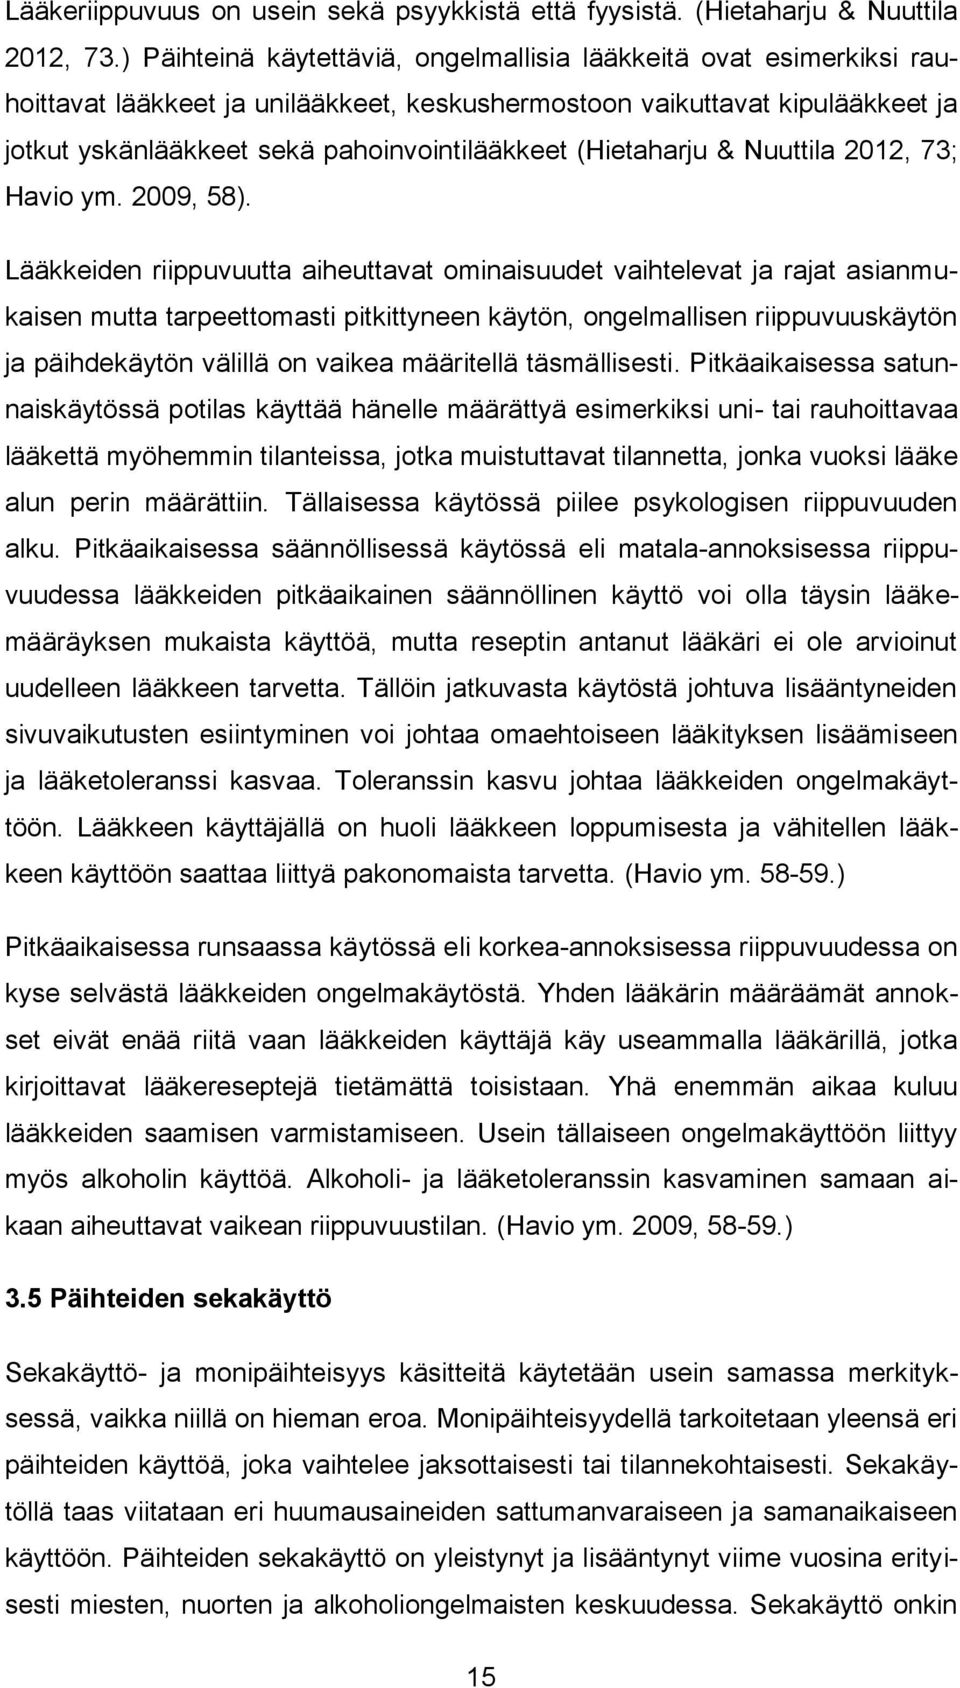 (Hietaharju & Nuuttila 2012, 73; Havio ym. 2009, 58).